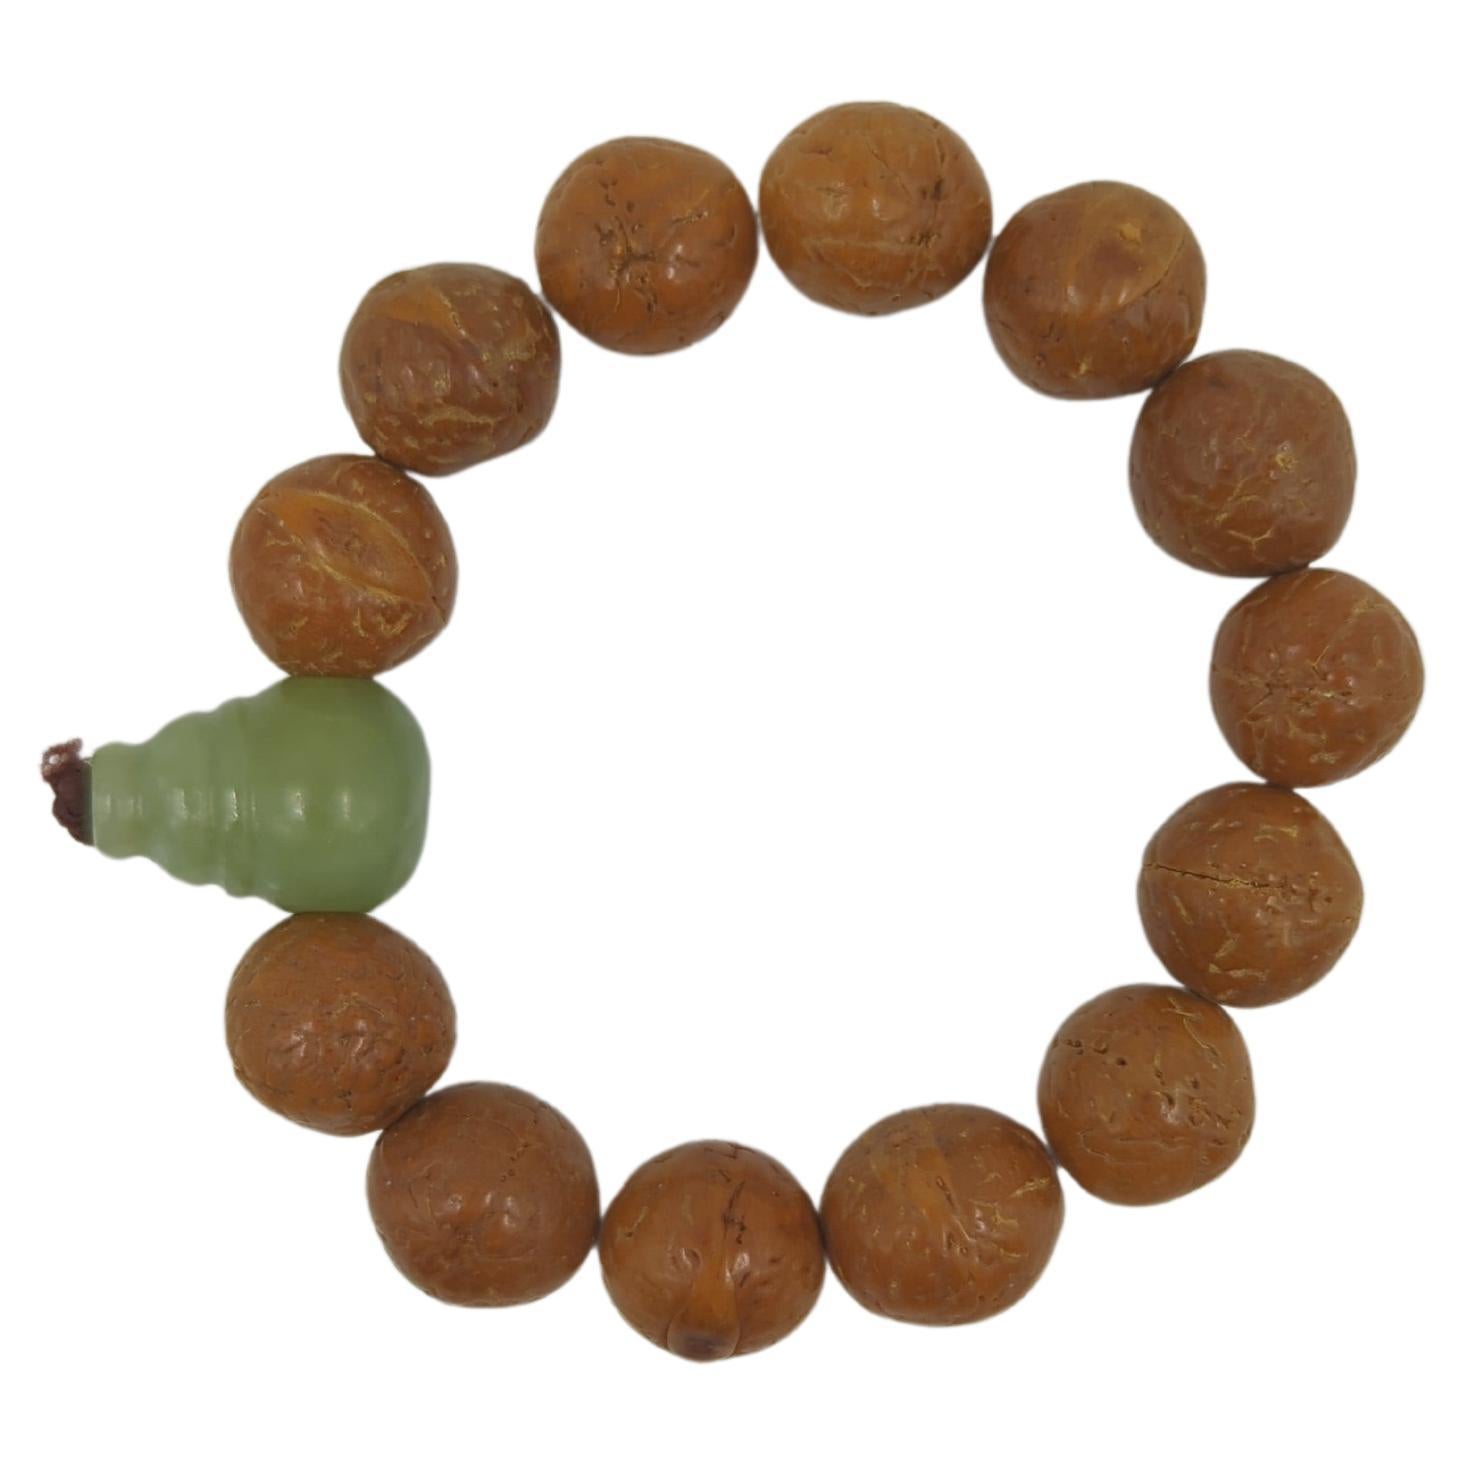 Artisan Antique Chinese Celadon Jade Hulu Bead Bodhi Seeds Bracelet - BEAUTIFUL PATINA For Sale